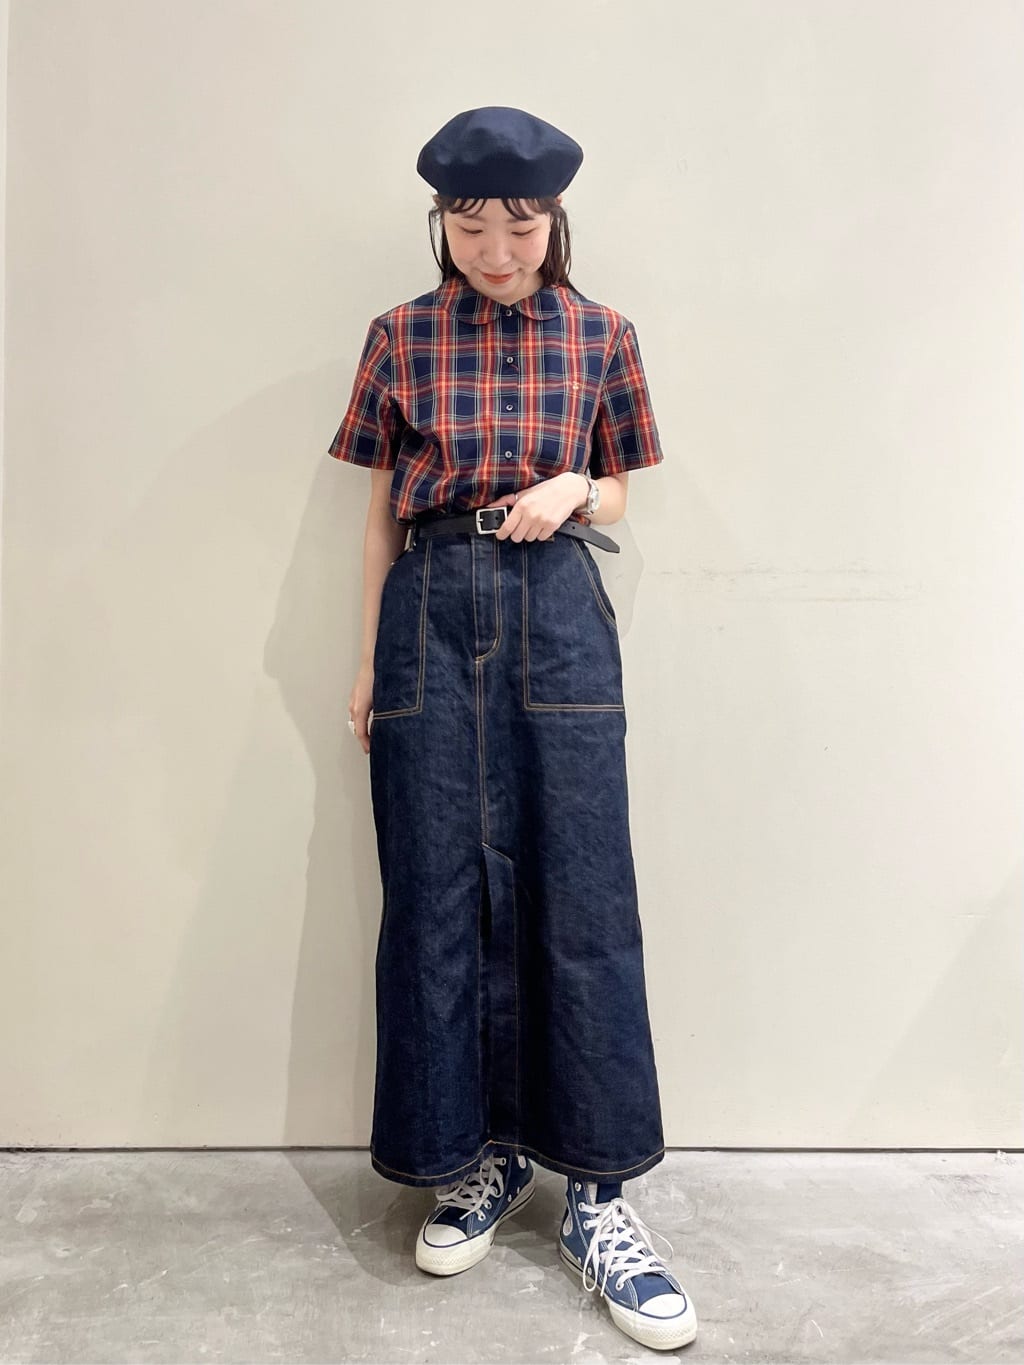 Dot and Stripes CHILD WOMAN CHILD WOMAN , PAR ICI 新宿ミロード 身長：154cm 2023.06.14